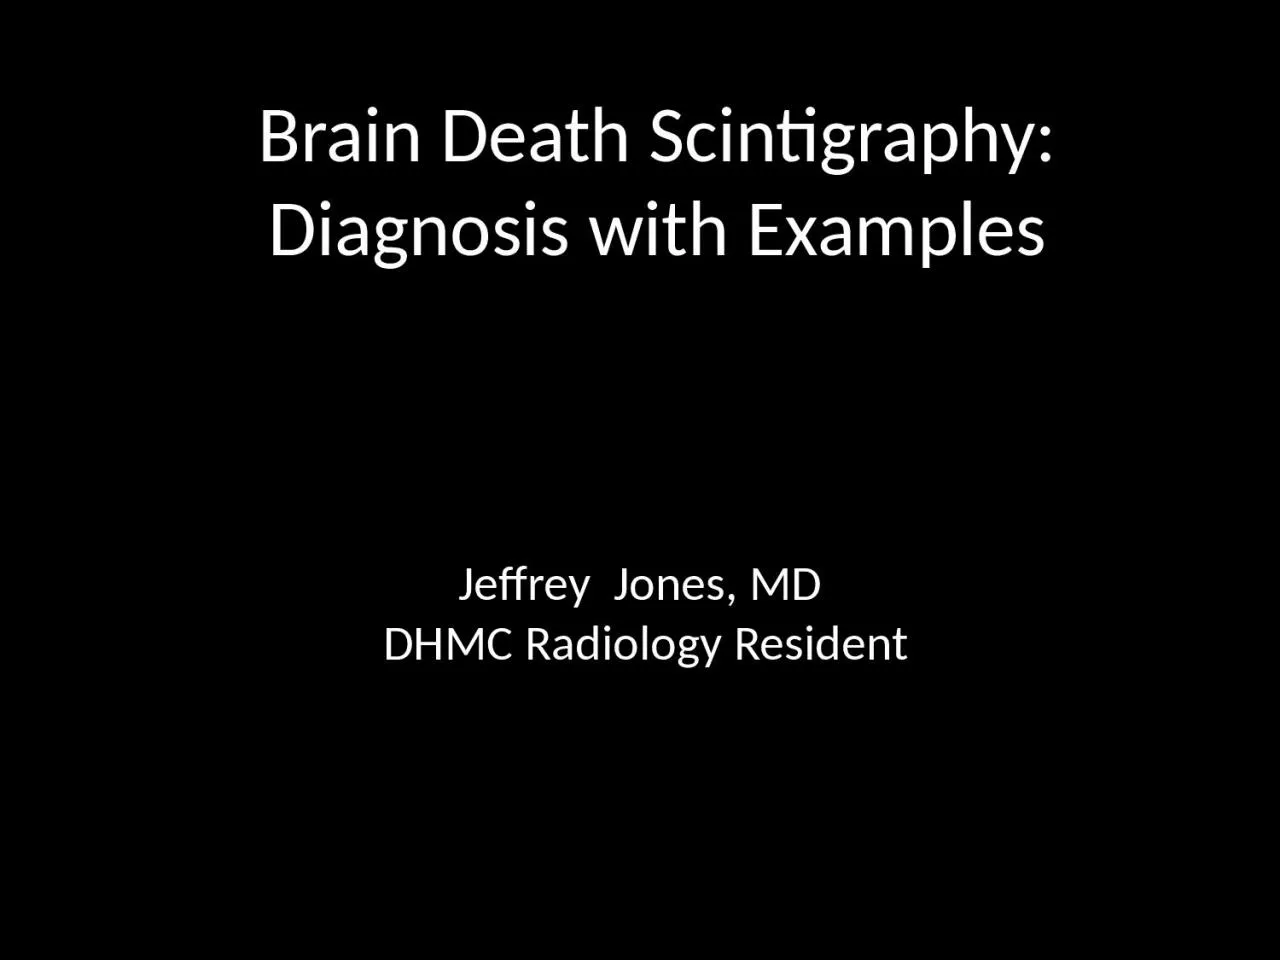 Brain Death Scintigraphy: